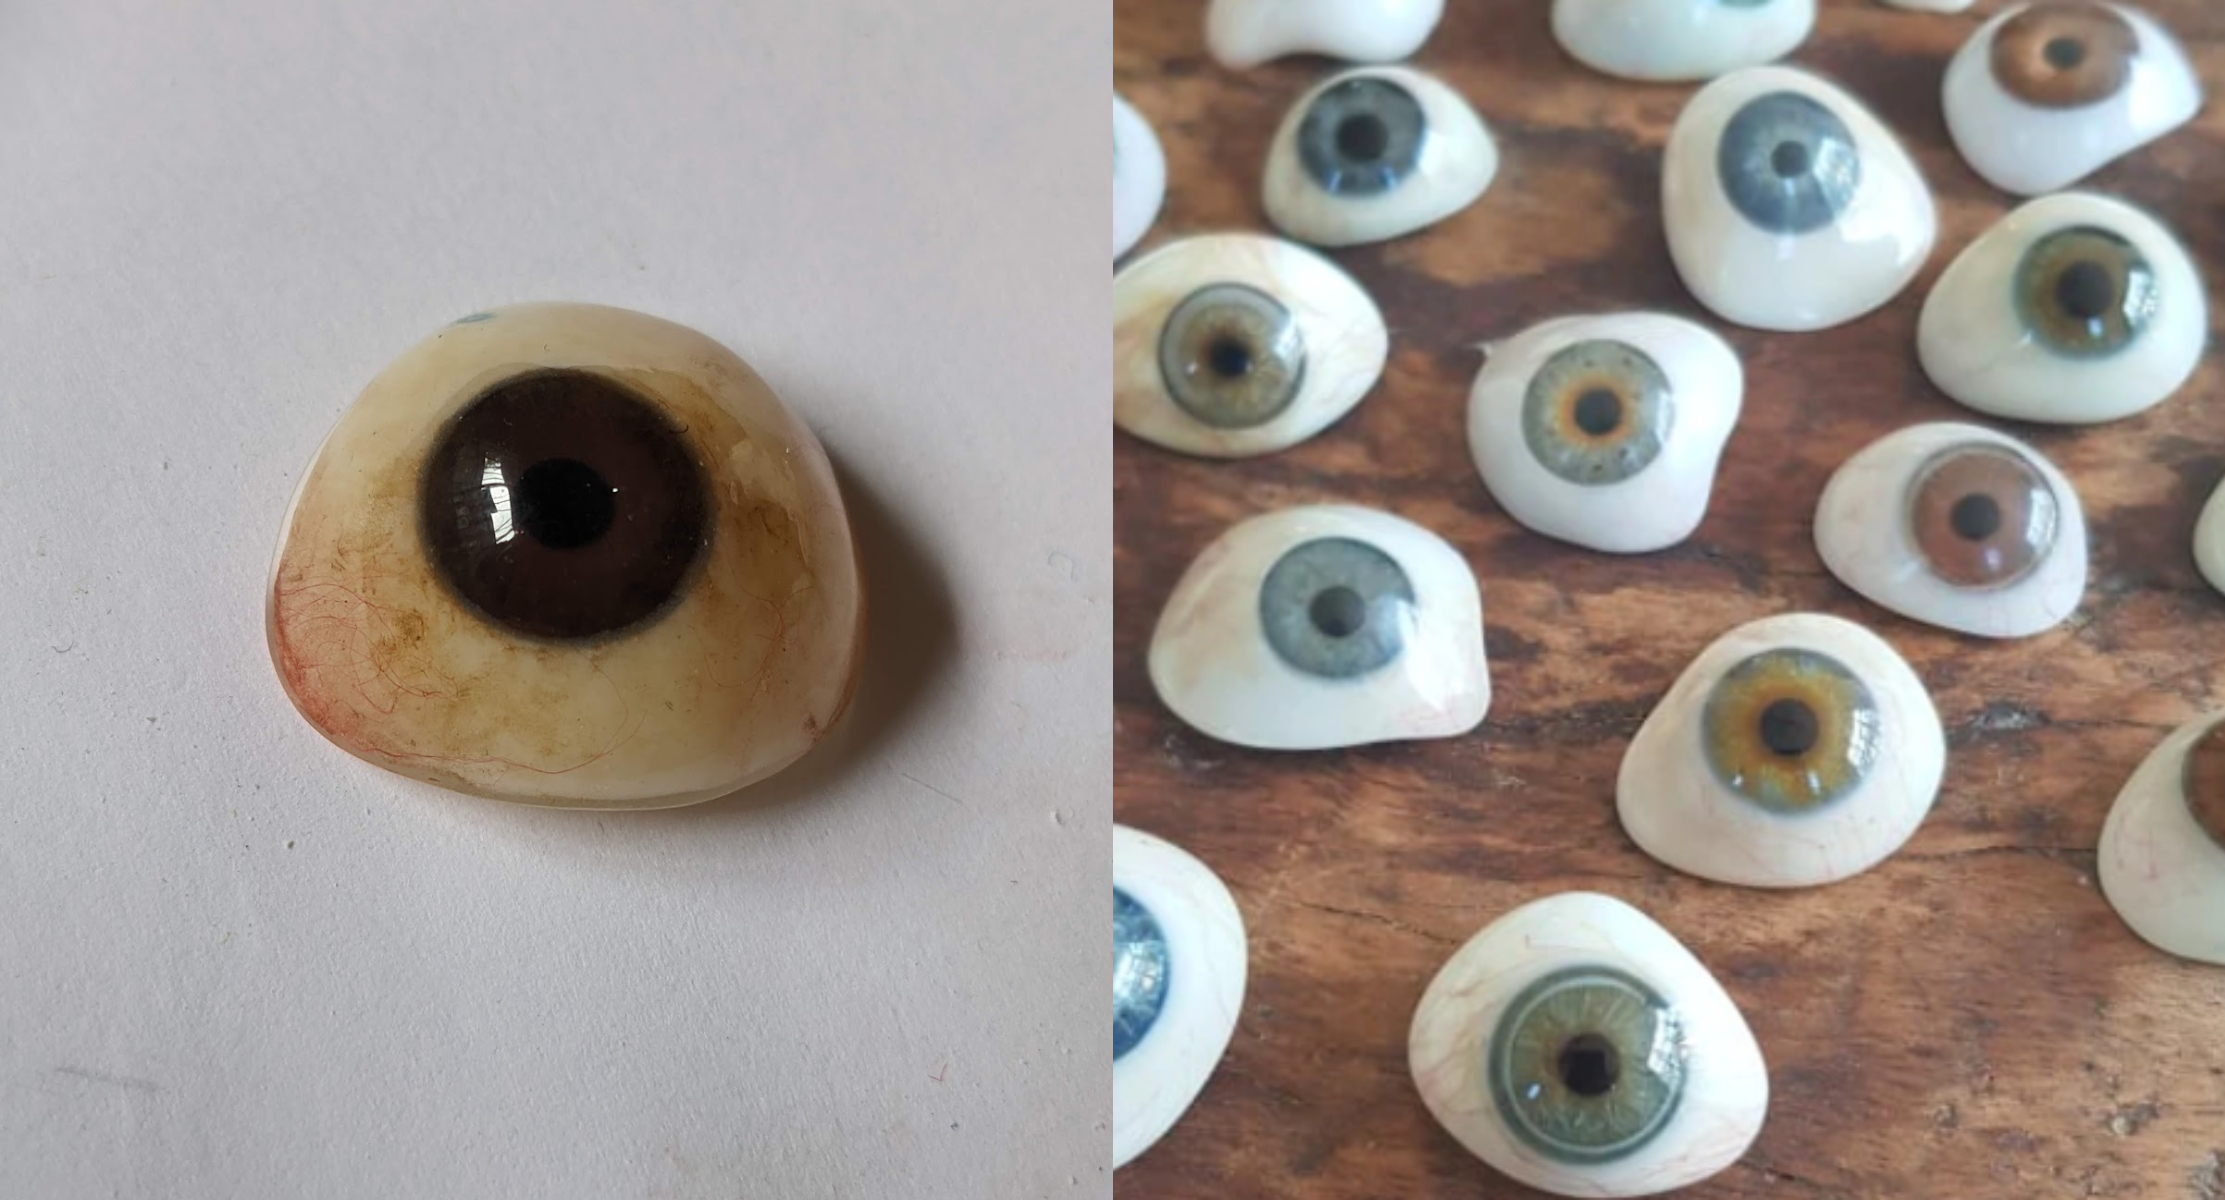 Eyes For All: Restorative prosthetic eye